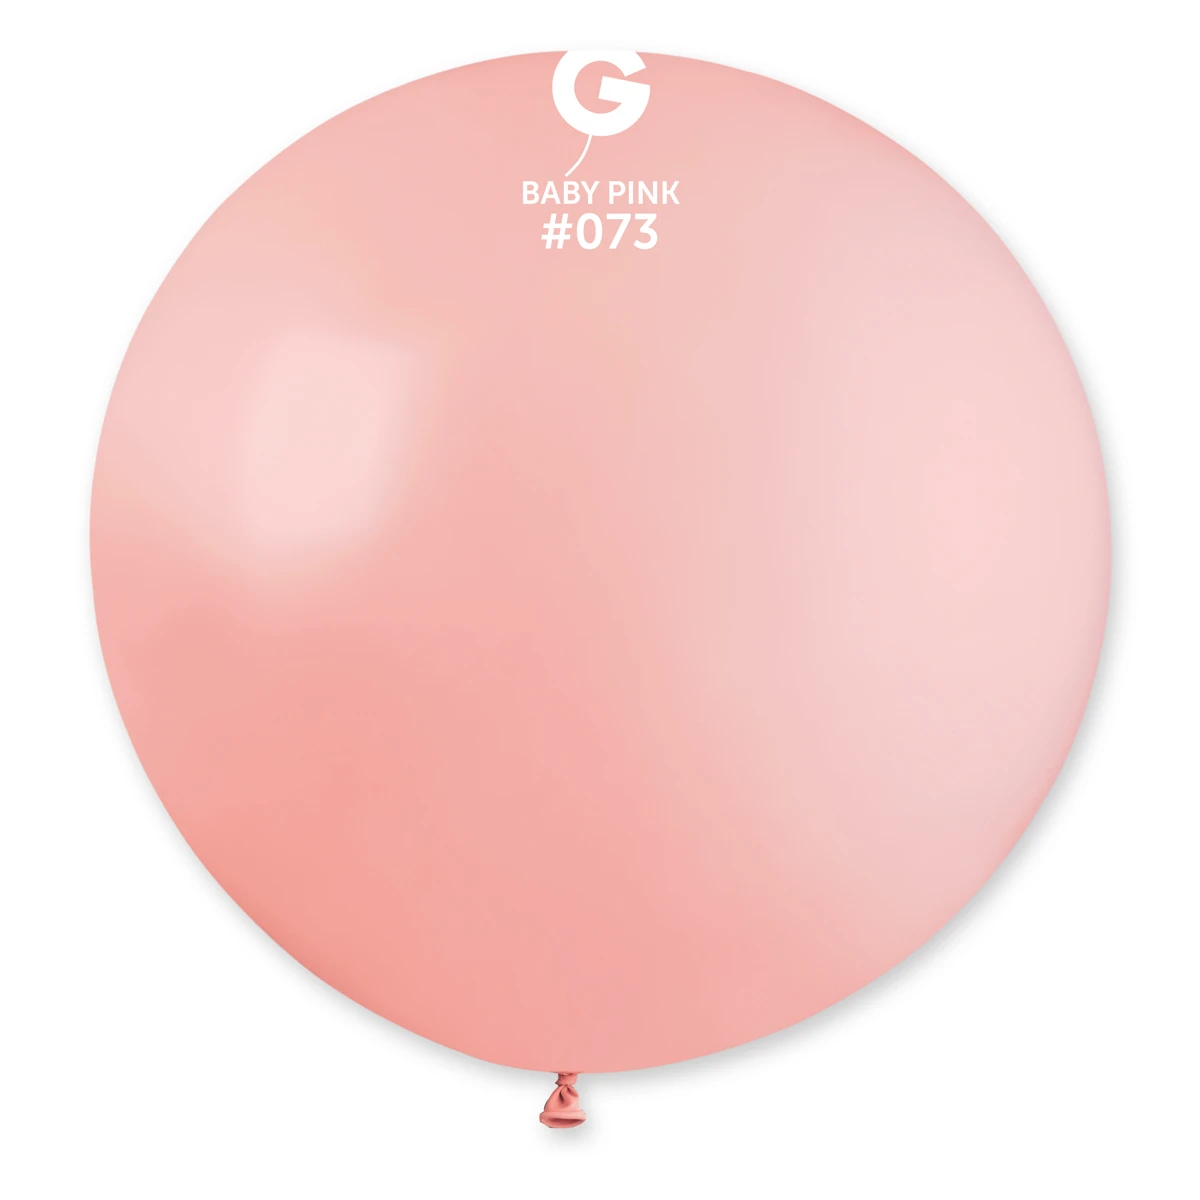 Standard Baby Pink #073 31in – 1 piece